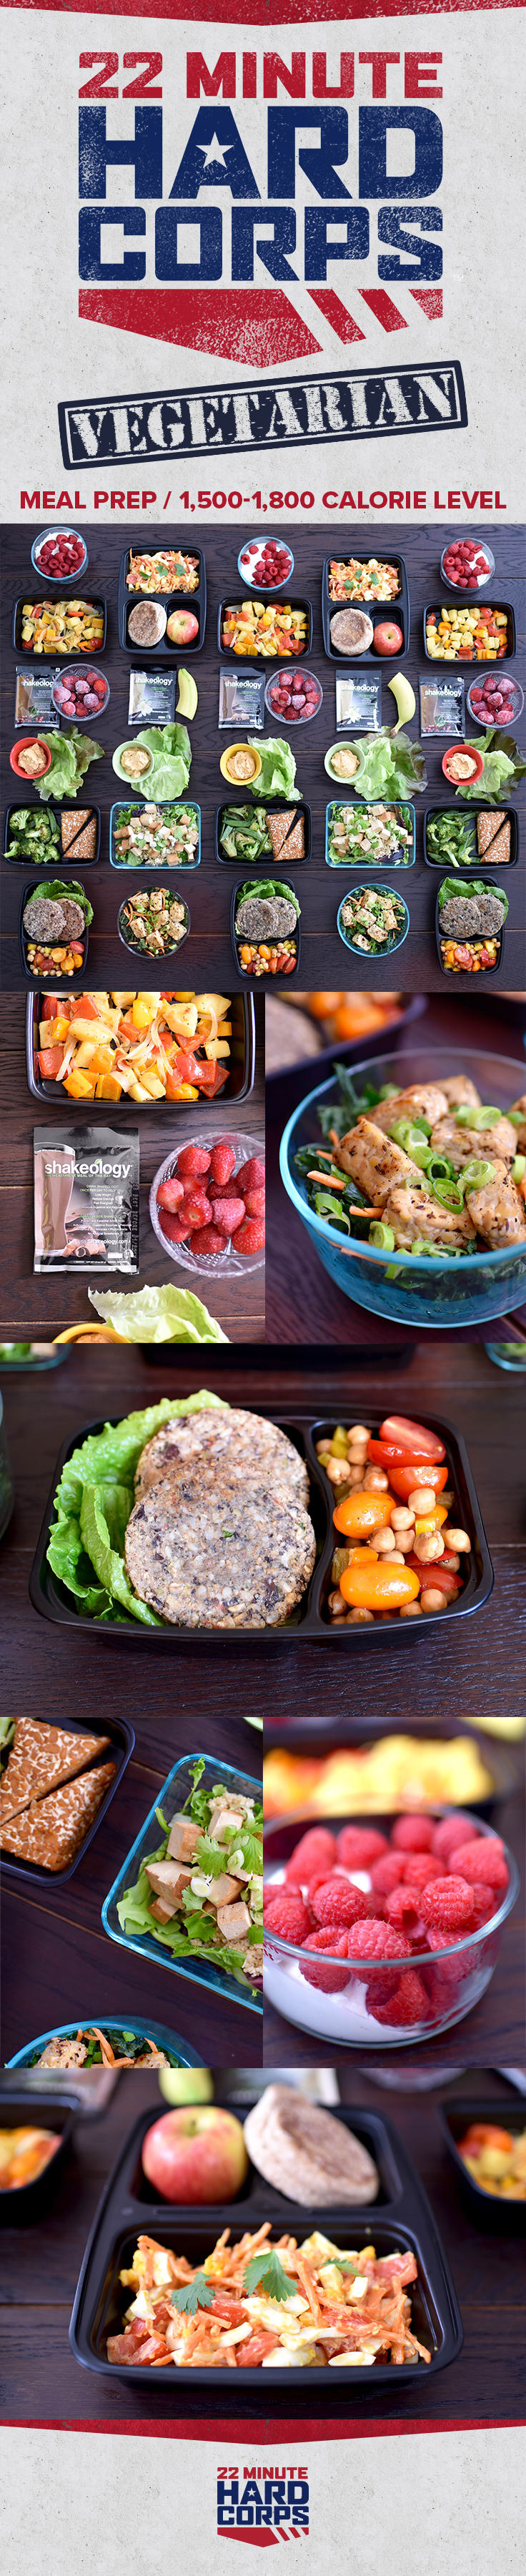 Vegetarian Meal Prep for 22 Minute Hard Corps 1,500-1,800 Calorie Level | BeachbodyBlog.com